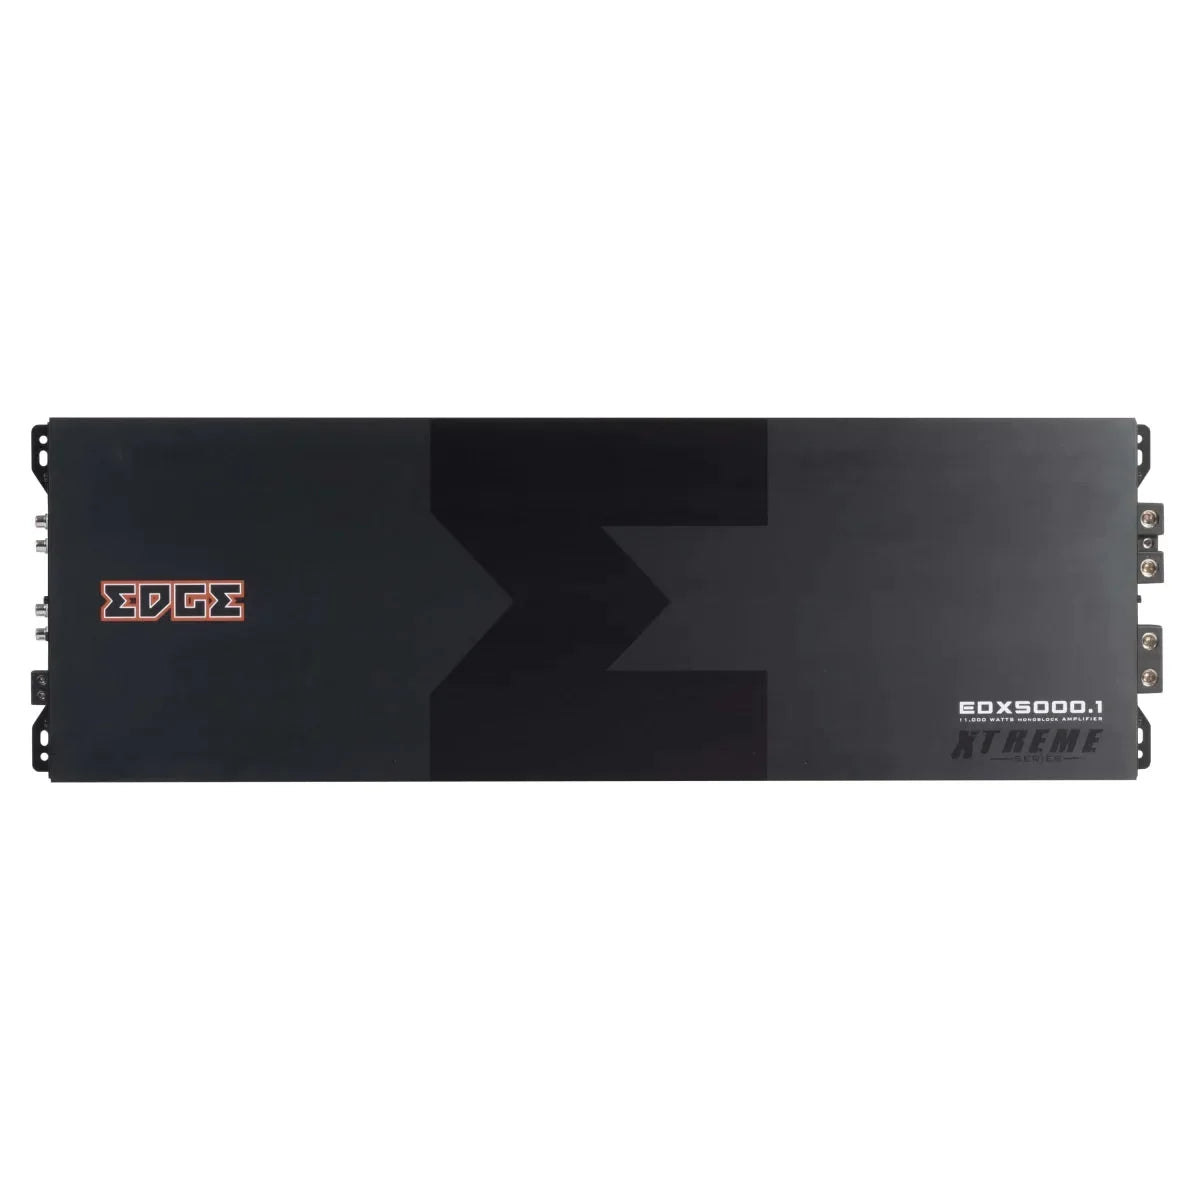 Xtreme EDX5000.1D-E2